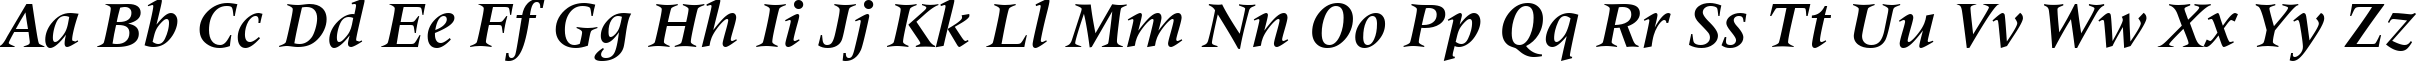 Пример написания английского алфавита шрифтом Latin 725 Bold Italic BT